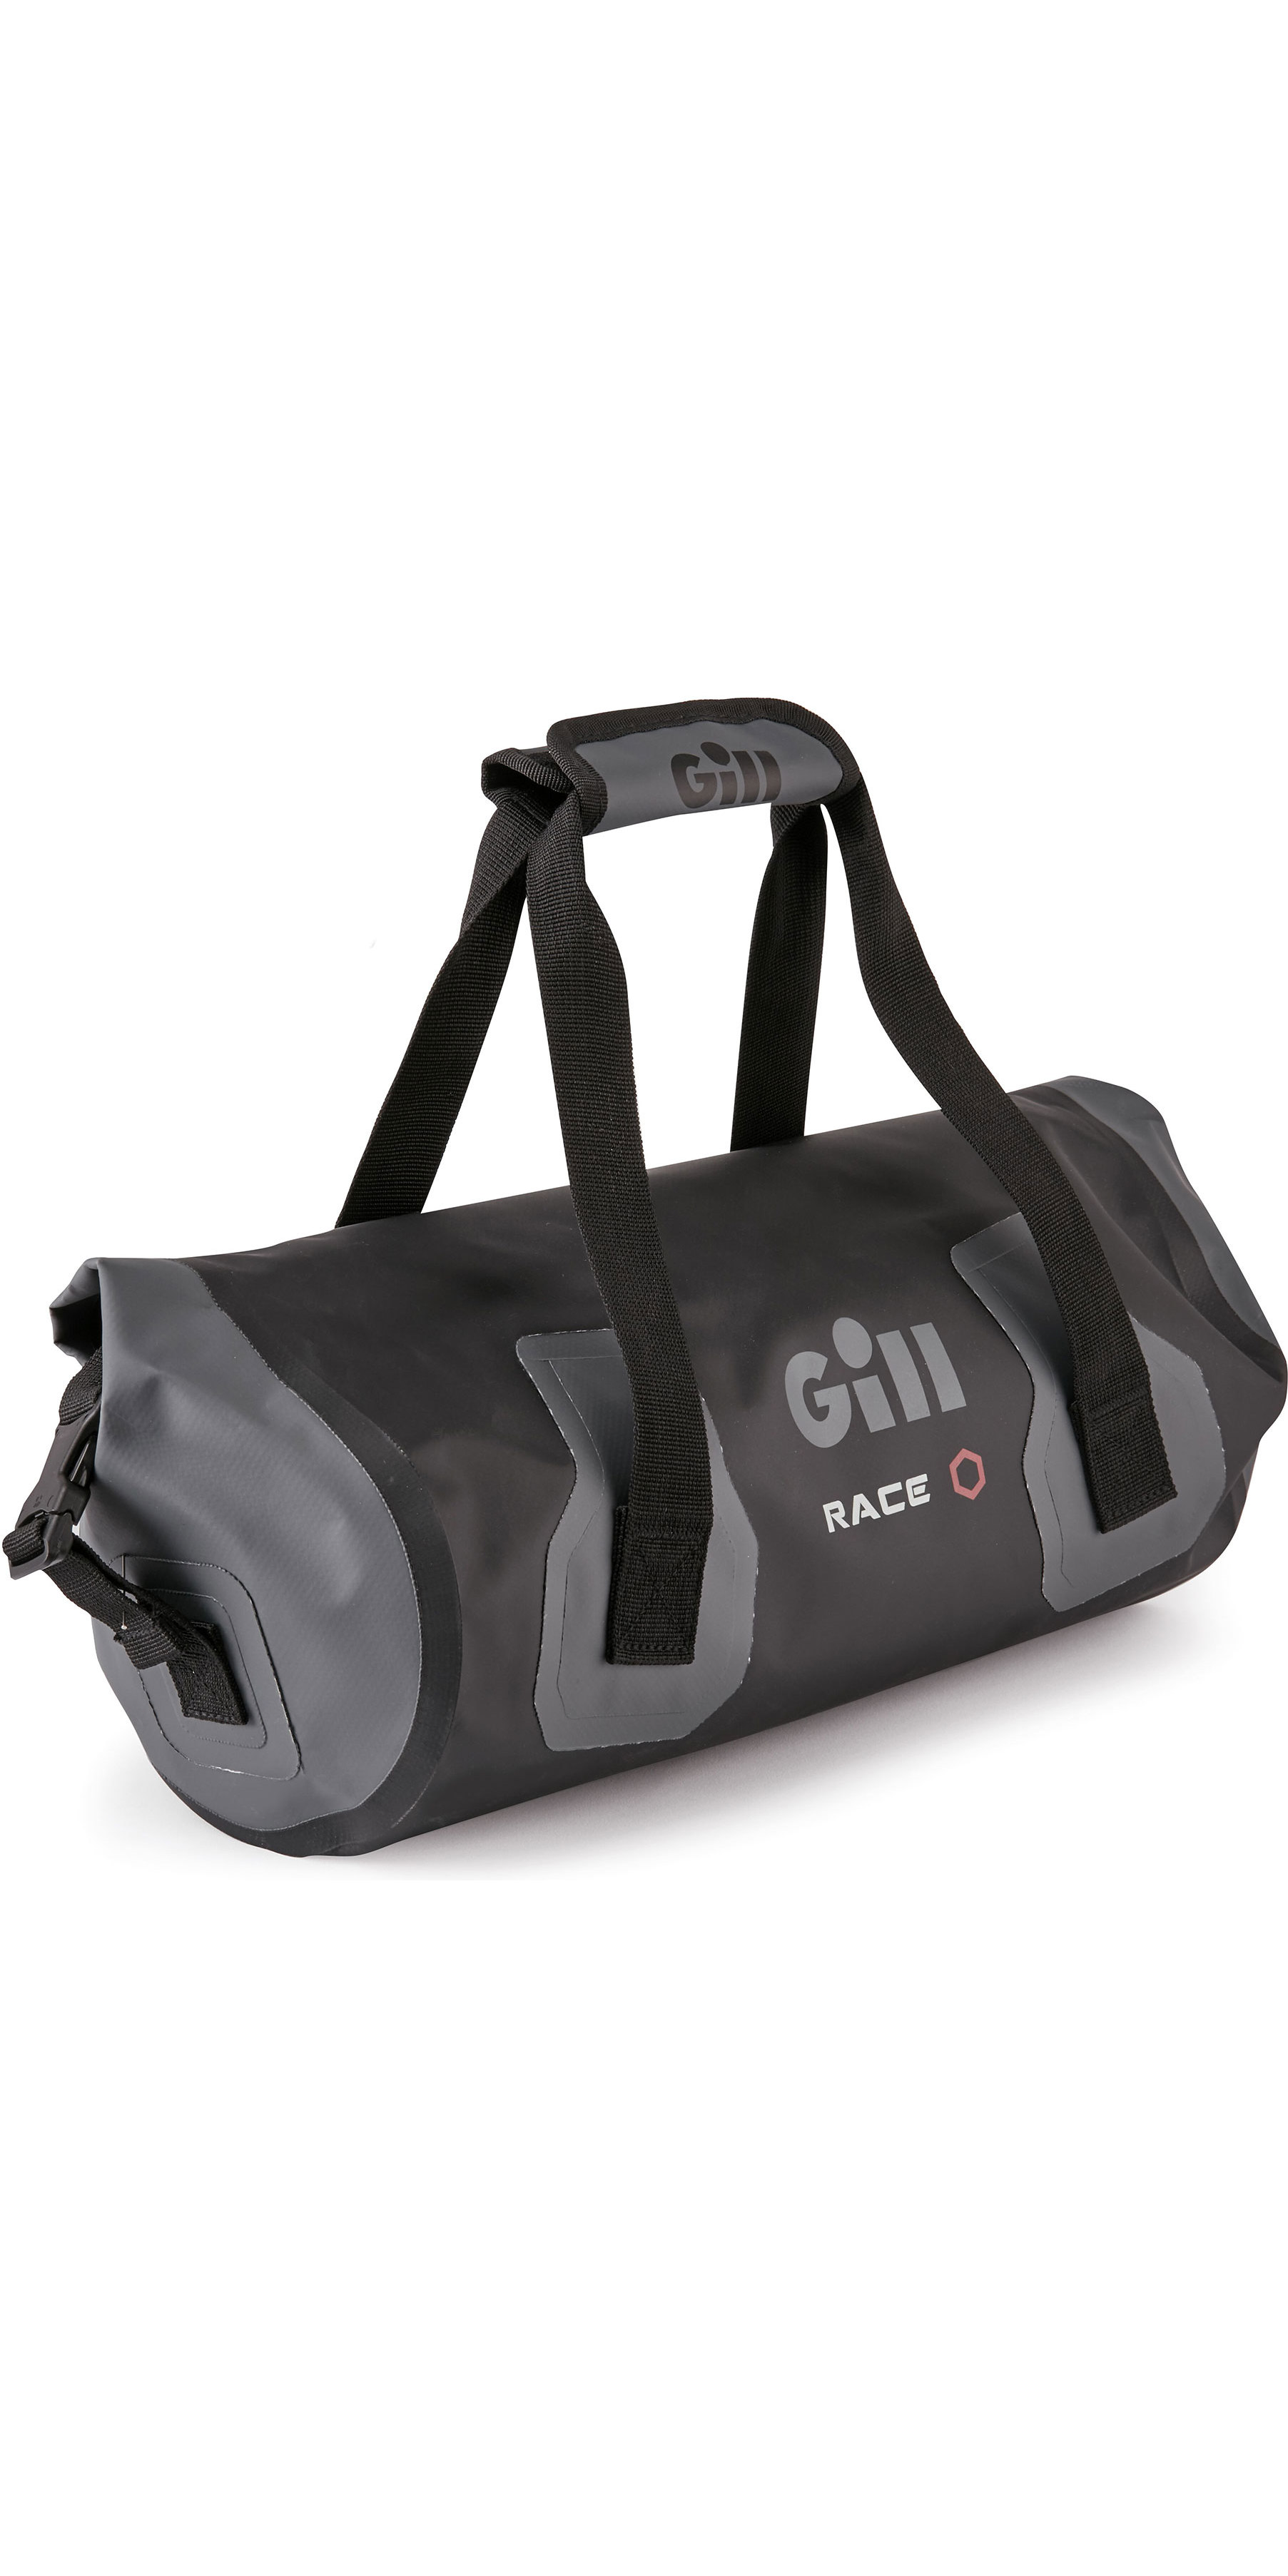 2019 Gill Race Team Bag Mini 10L Graphite RS30 - Accessories - Luggage ...